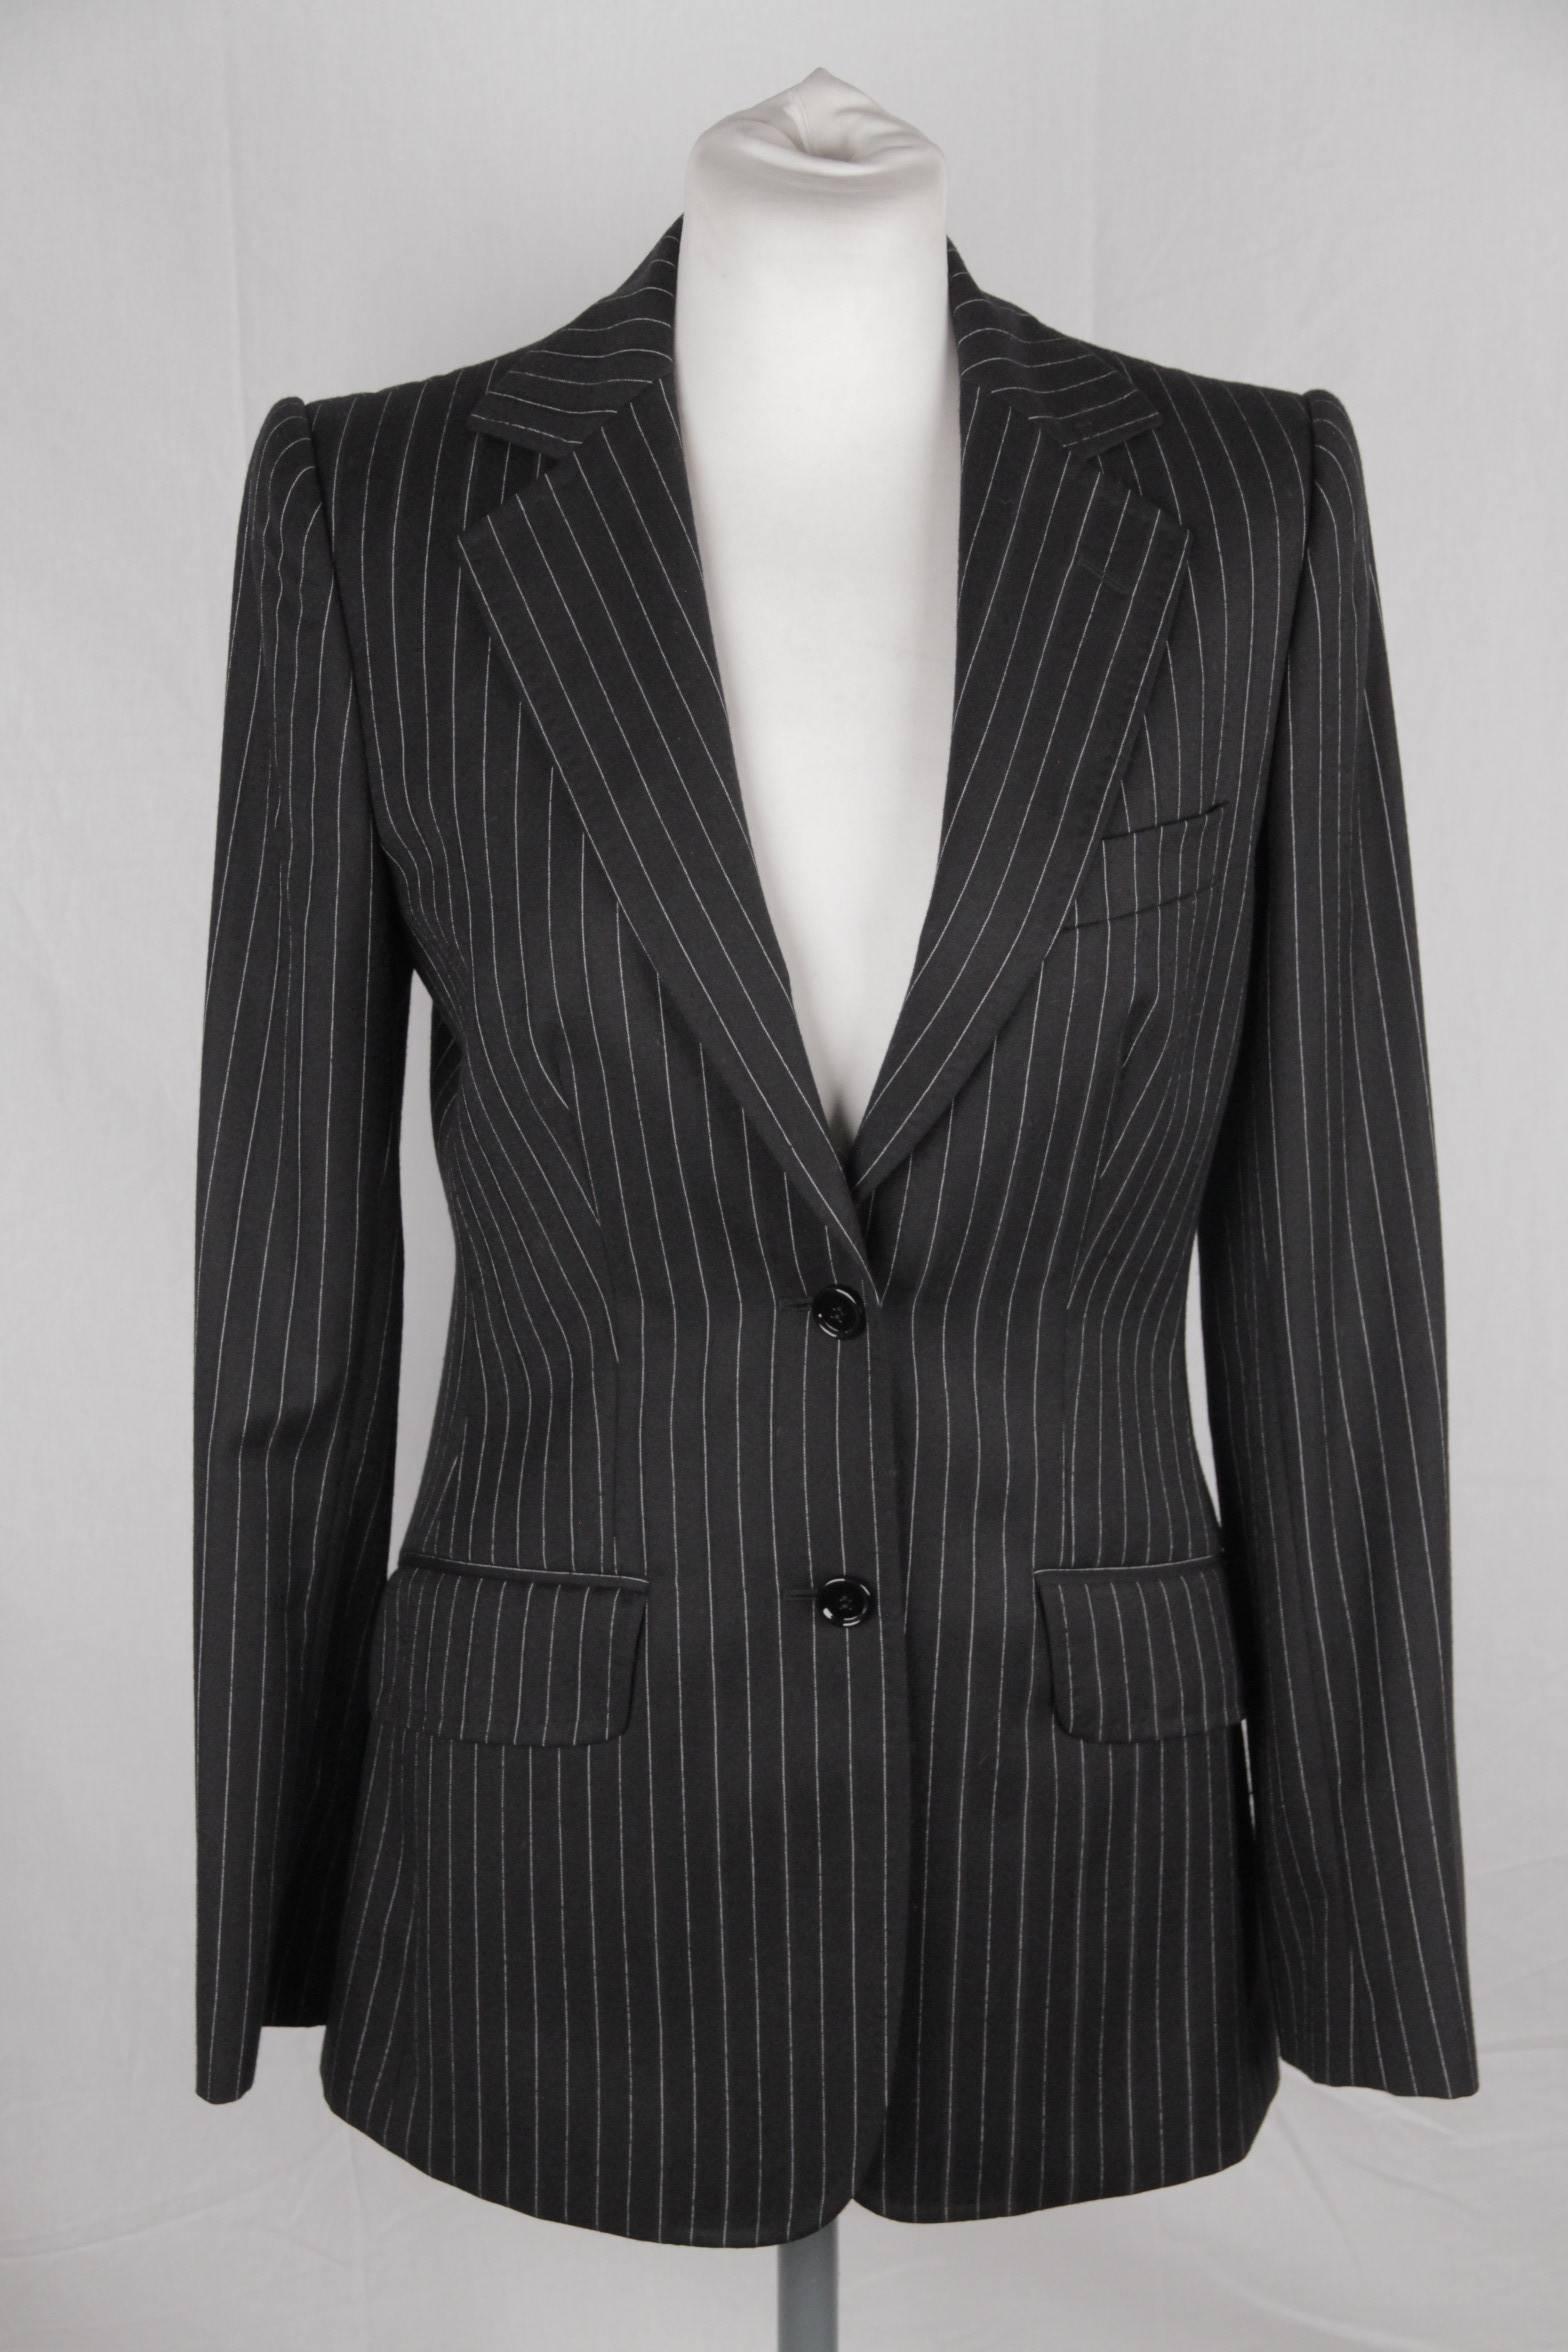 Women's DOLCE & GABBANA Black PinStriped Wool SUIT Blazer & Trousers Set SIZE 40